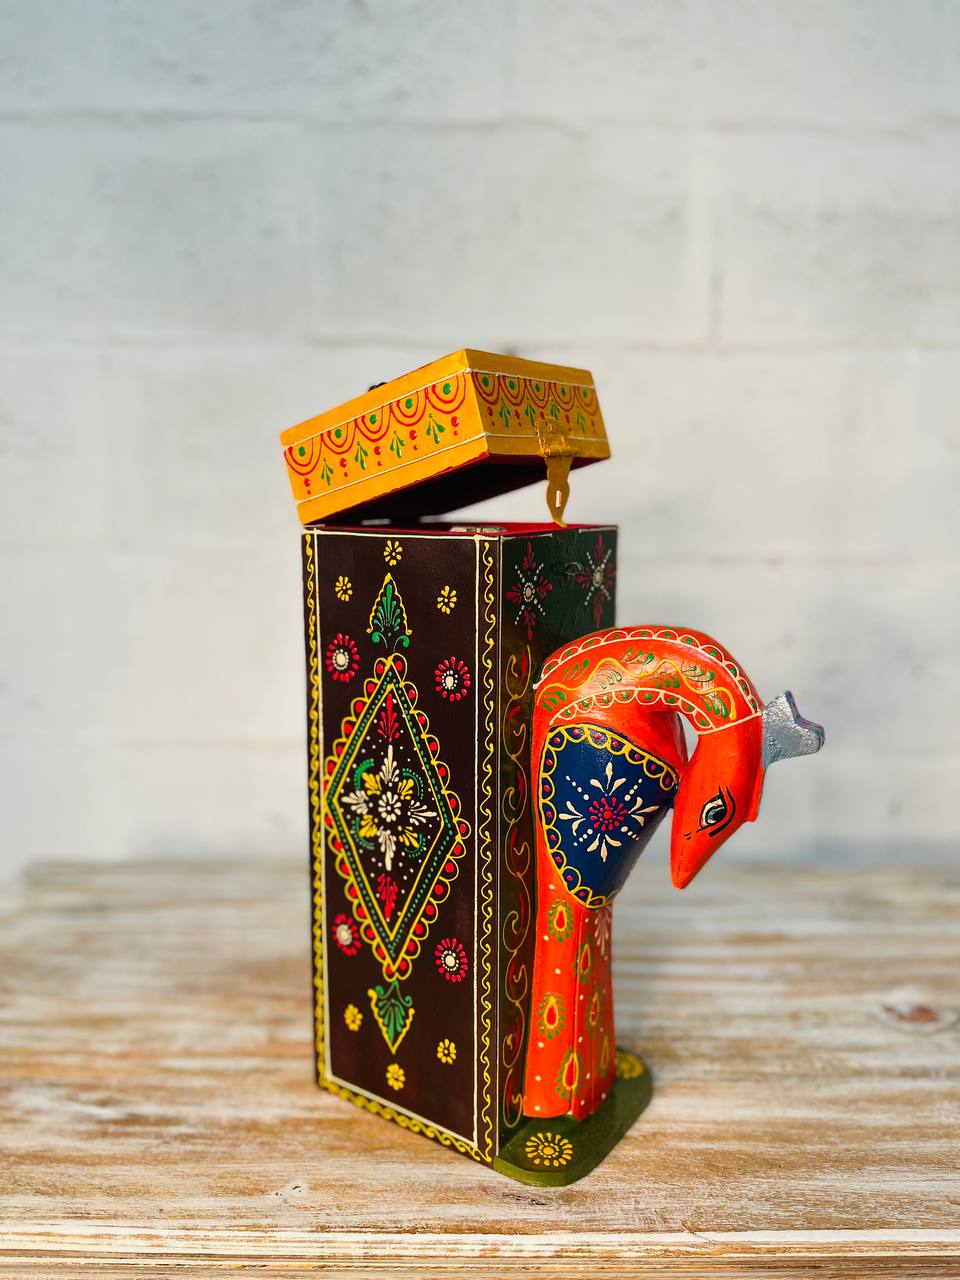 Caja Botellera "Pavo Majestuoso" - Madera Tallada, Pintada a Mano con Diseños y Cabeza de Pavo